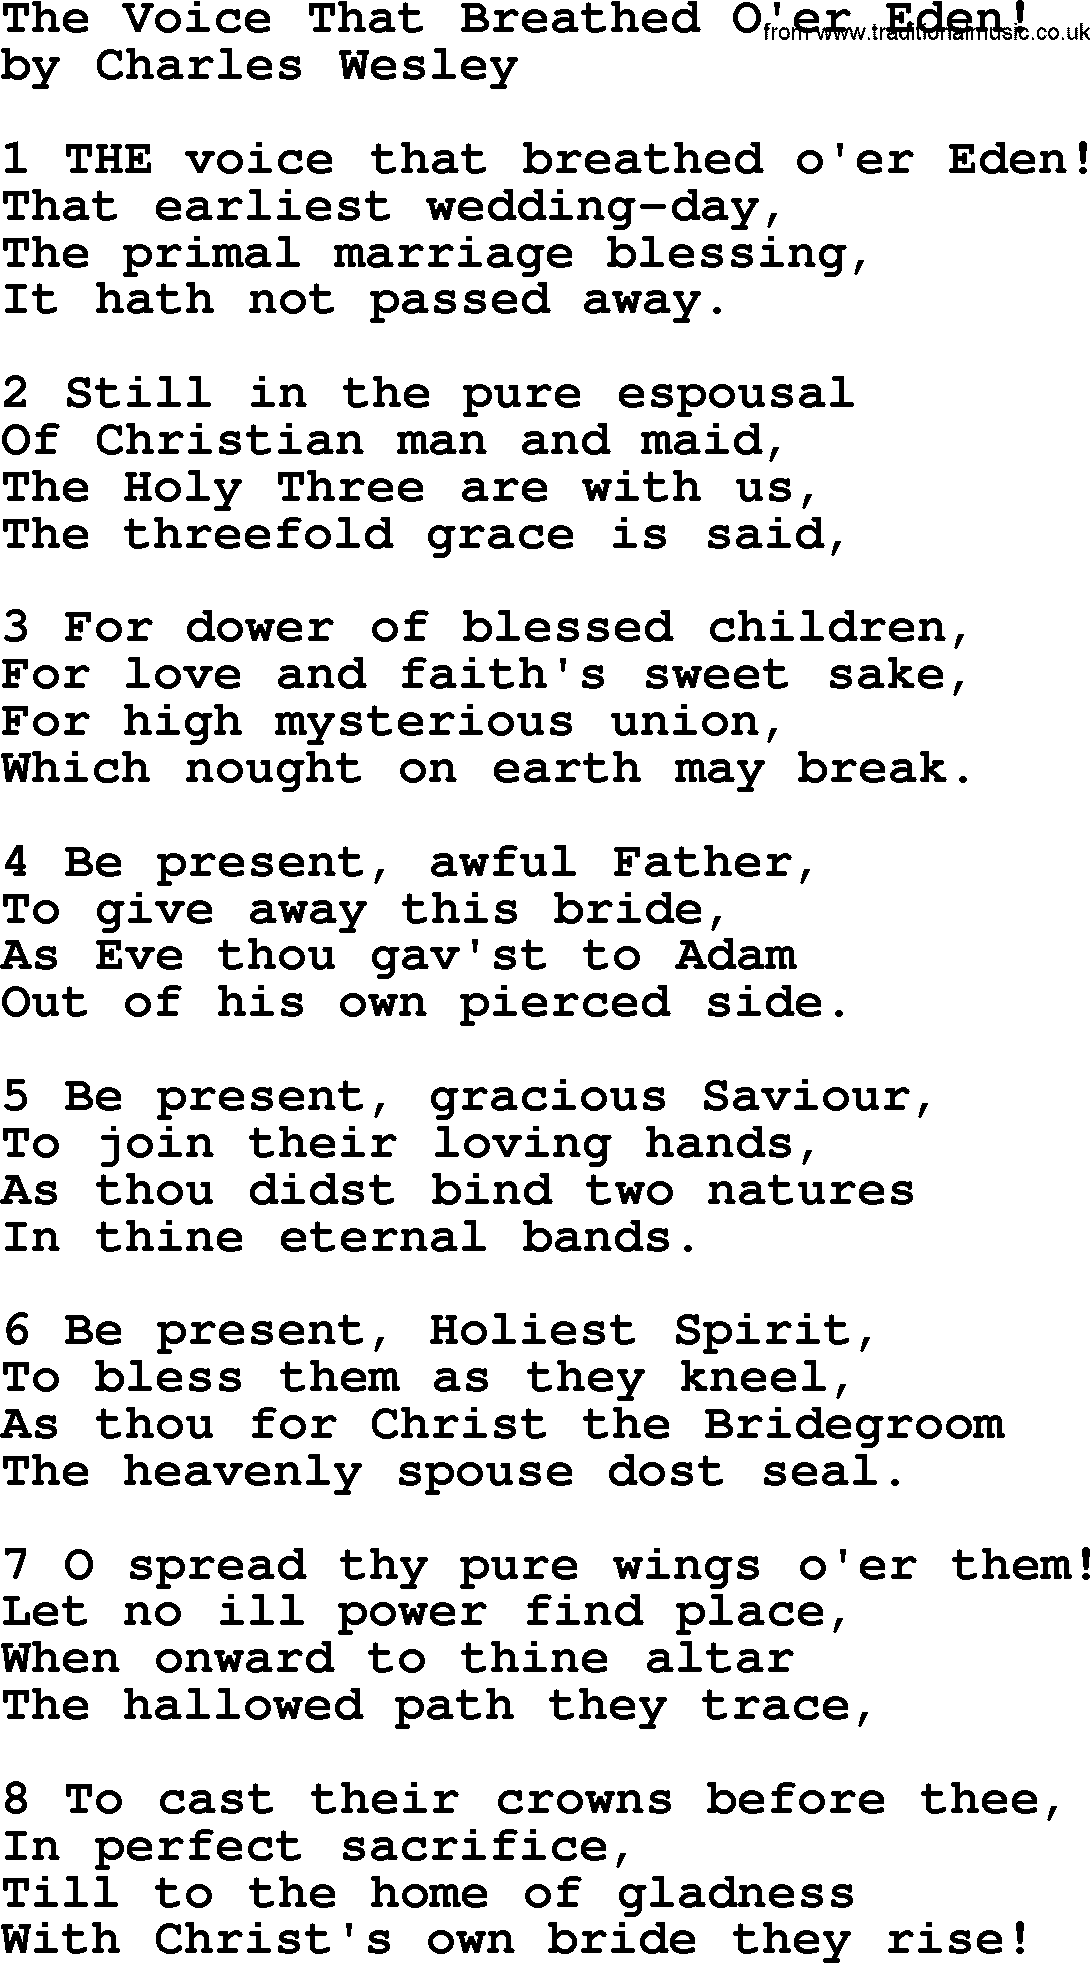 Charles Wesley hymn: The Voice That Breathed O'er Eden!, lyrics